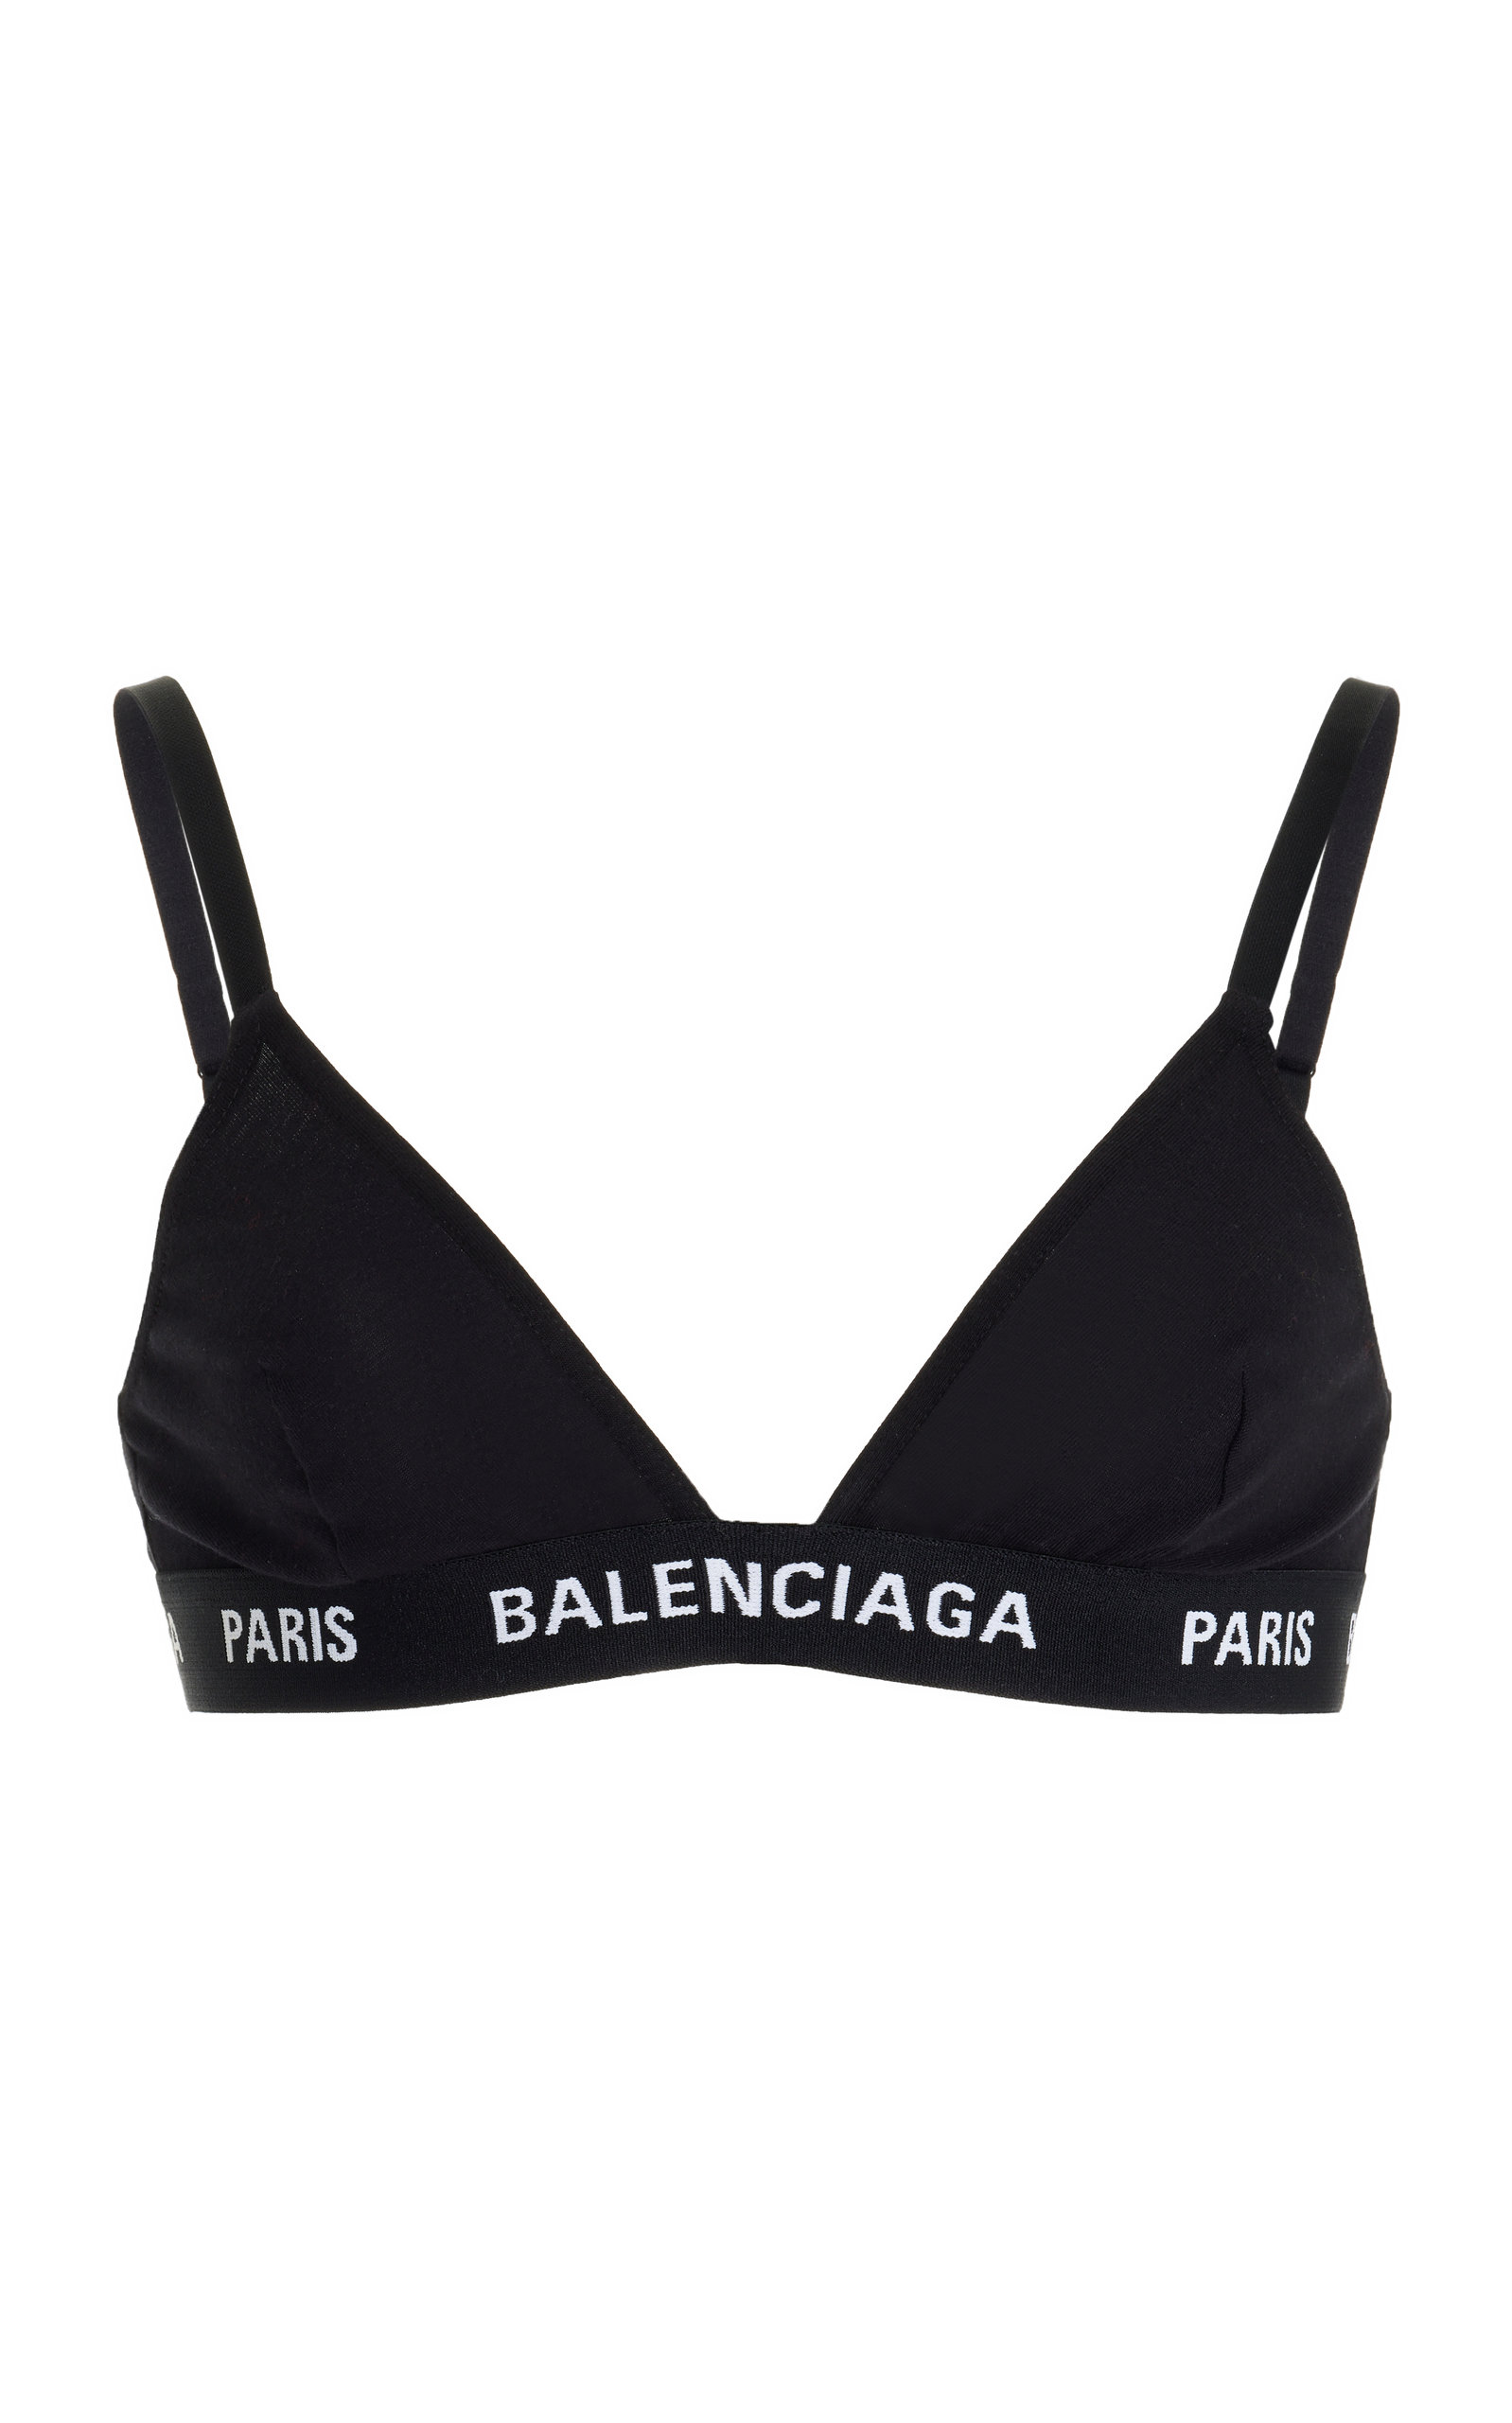 Balenciaga Women's Cotton Jersey Paris Bra